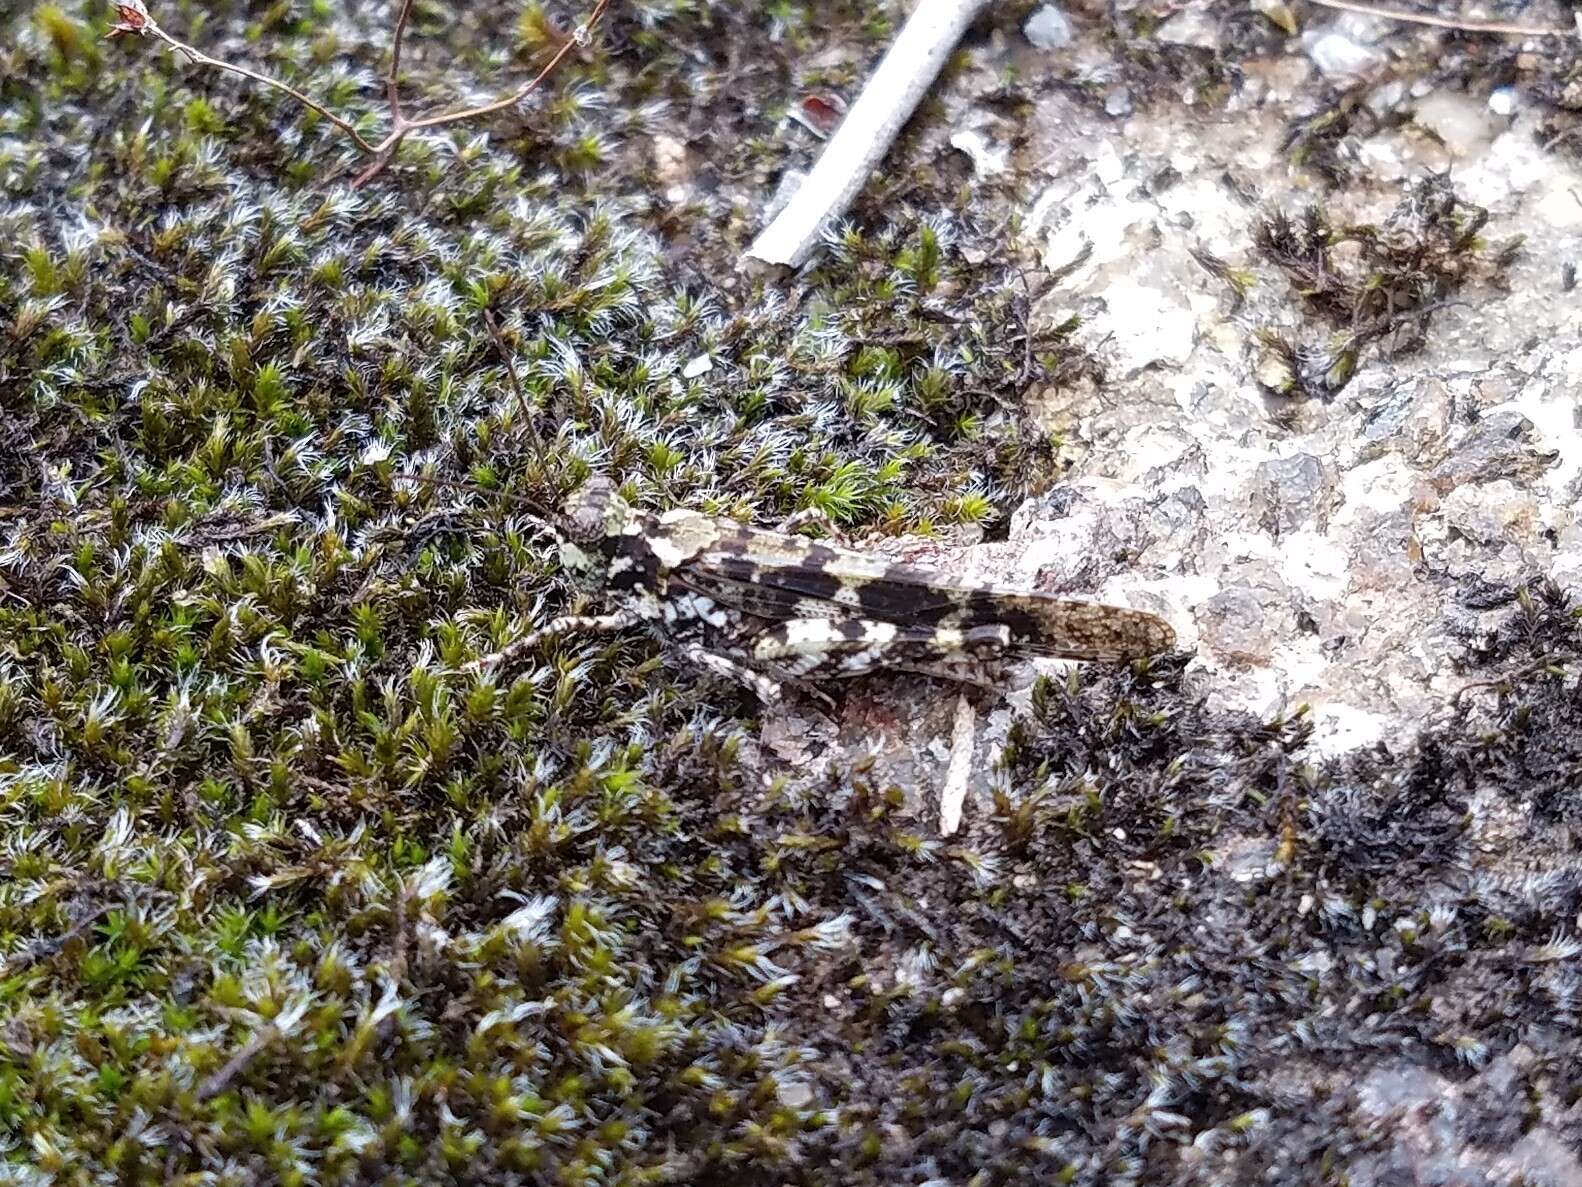 Image of Lichen Grasshopper